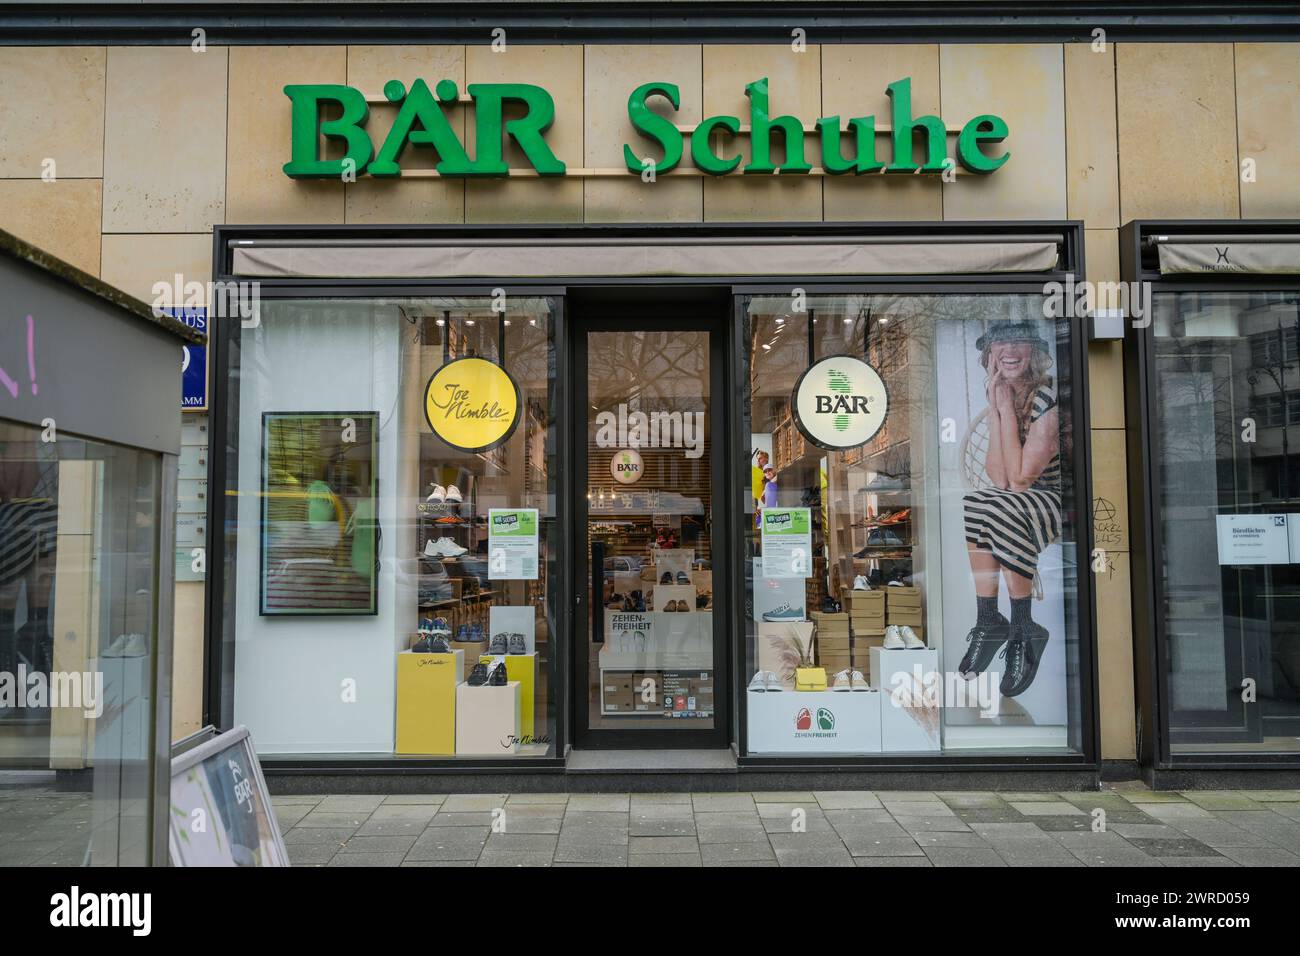 Bär Schuhe, Kurfürstendamm, Charlottenburg, Berlin, Deutschland *** Bär Schuhe, Kurfürstendamm, Charlottenburg, Berlin, Germany Stock Photo